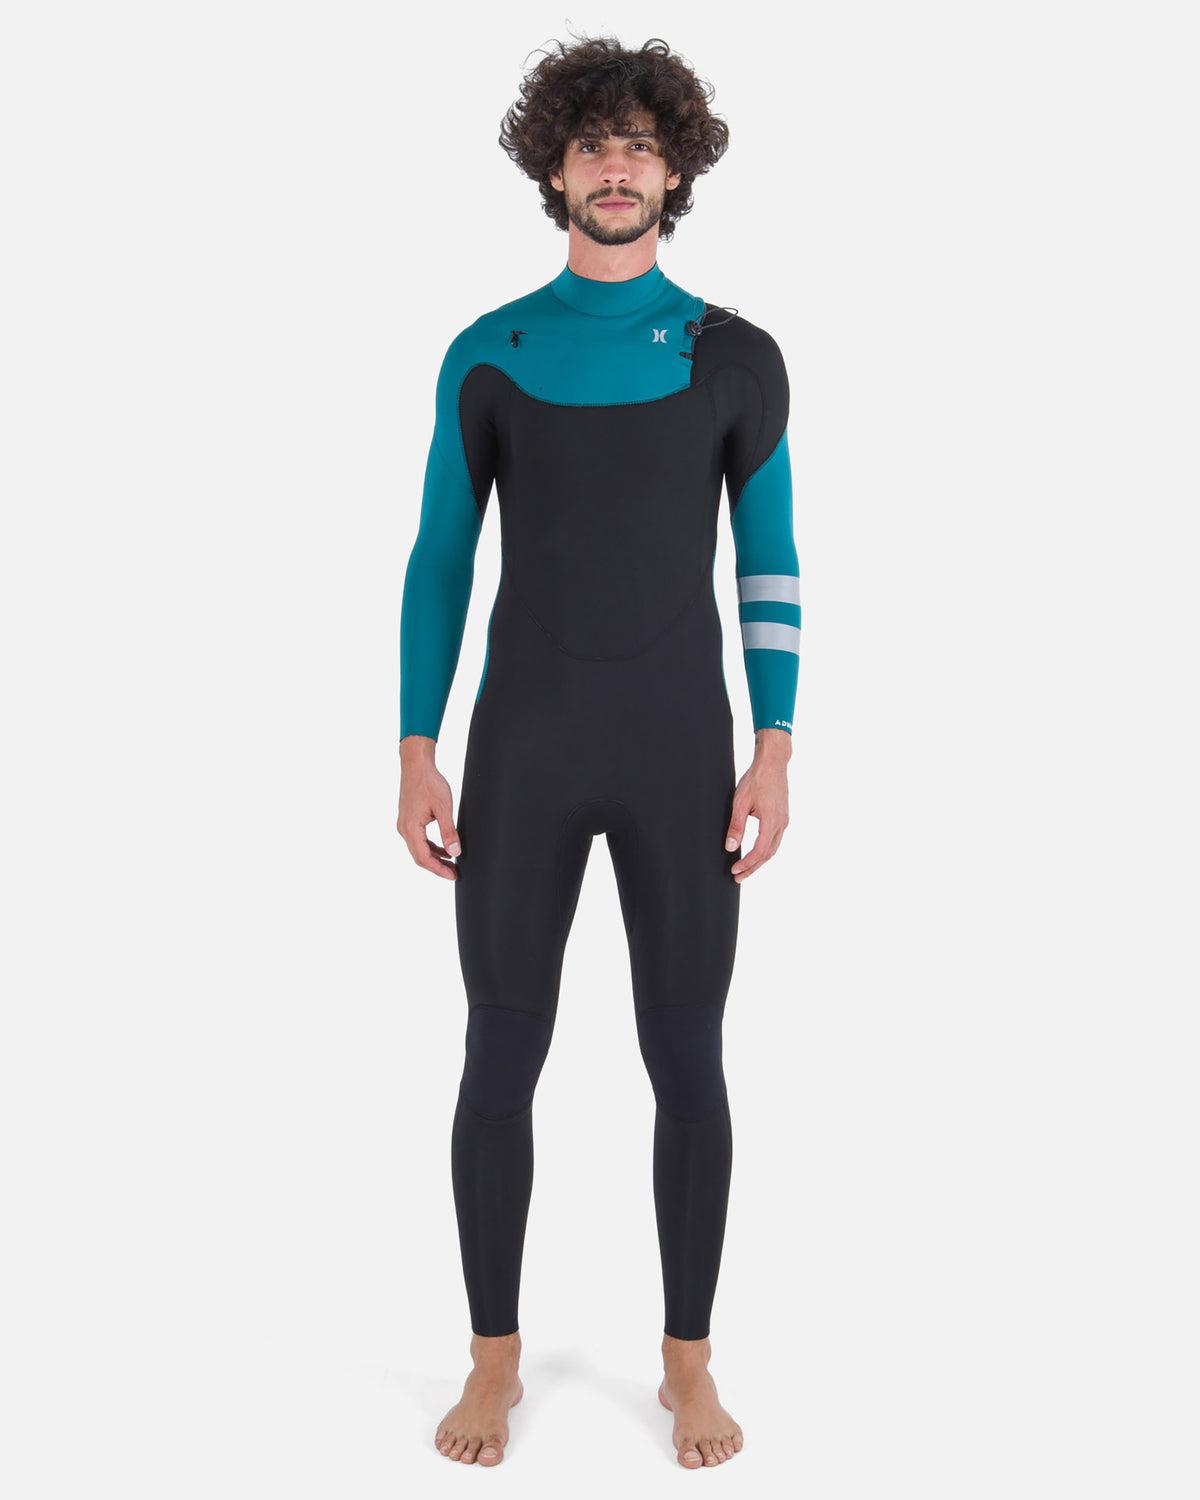 Men's Surf & Swimwear: Boardshorts, Wetsuits, Springsuits, Fullsuits & more